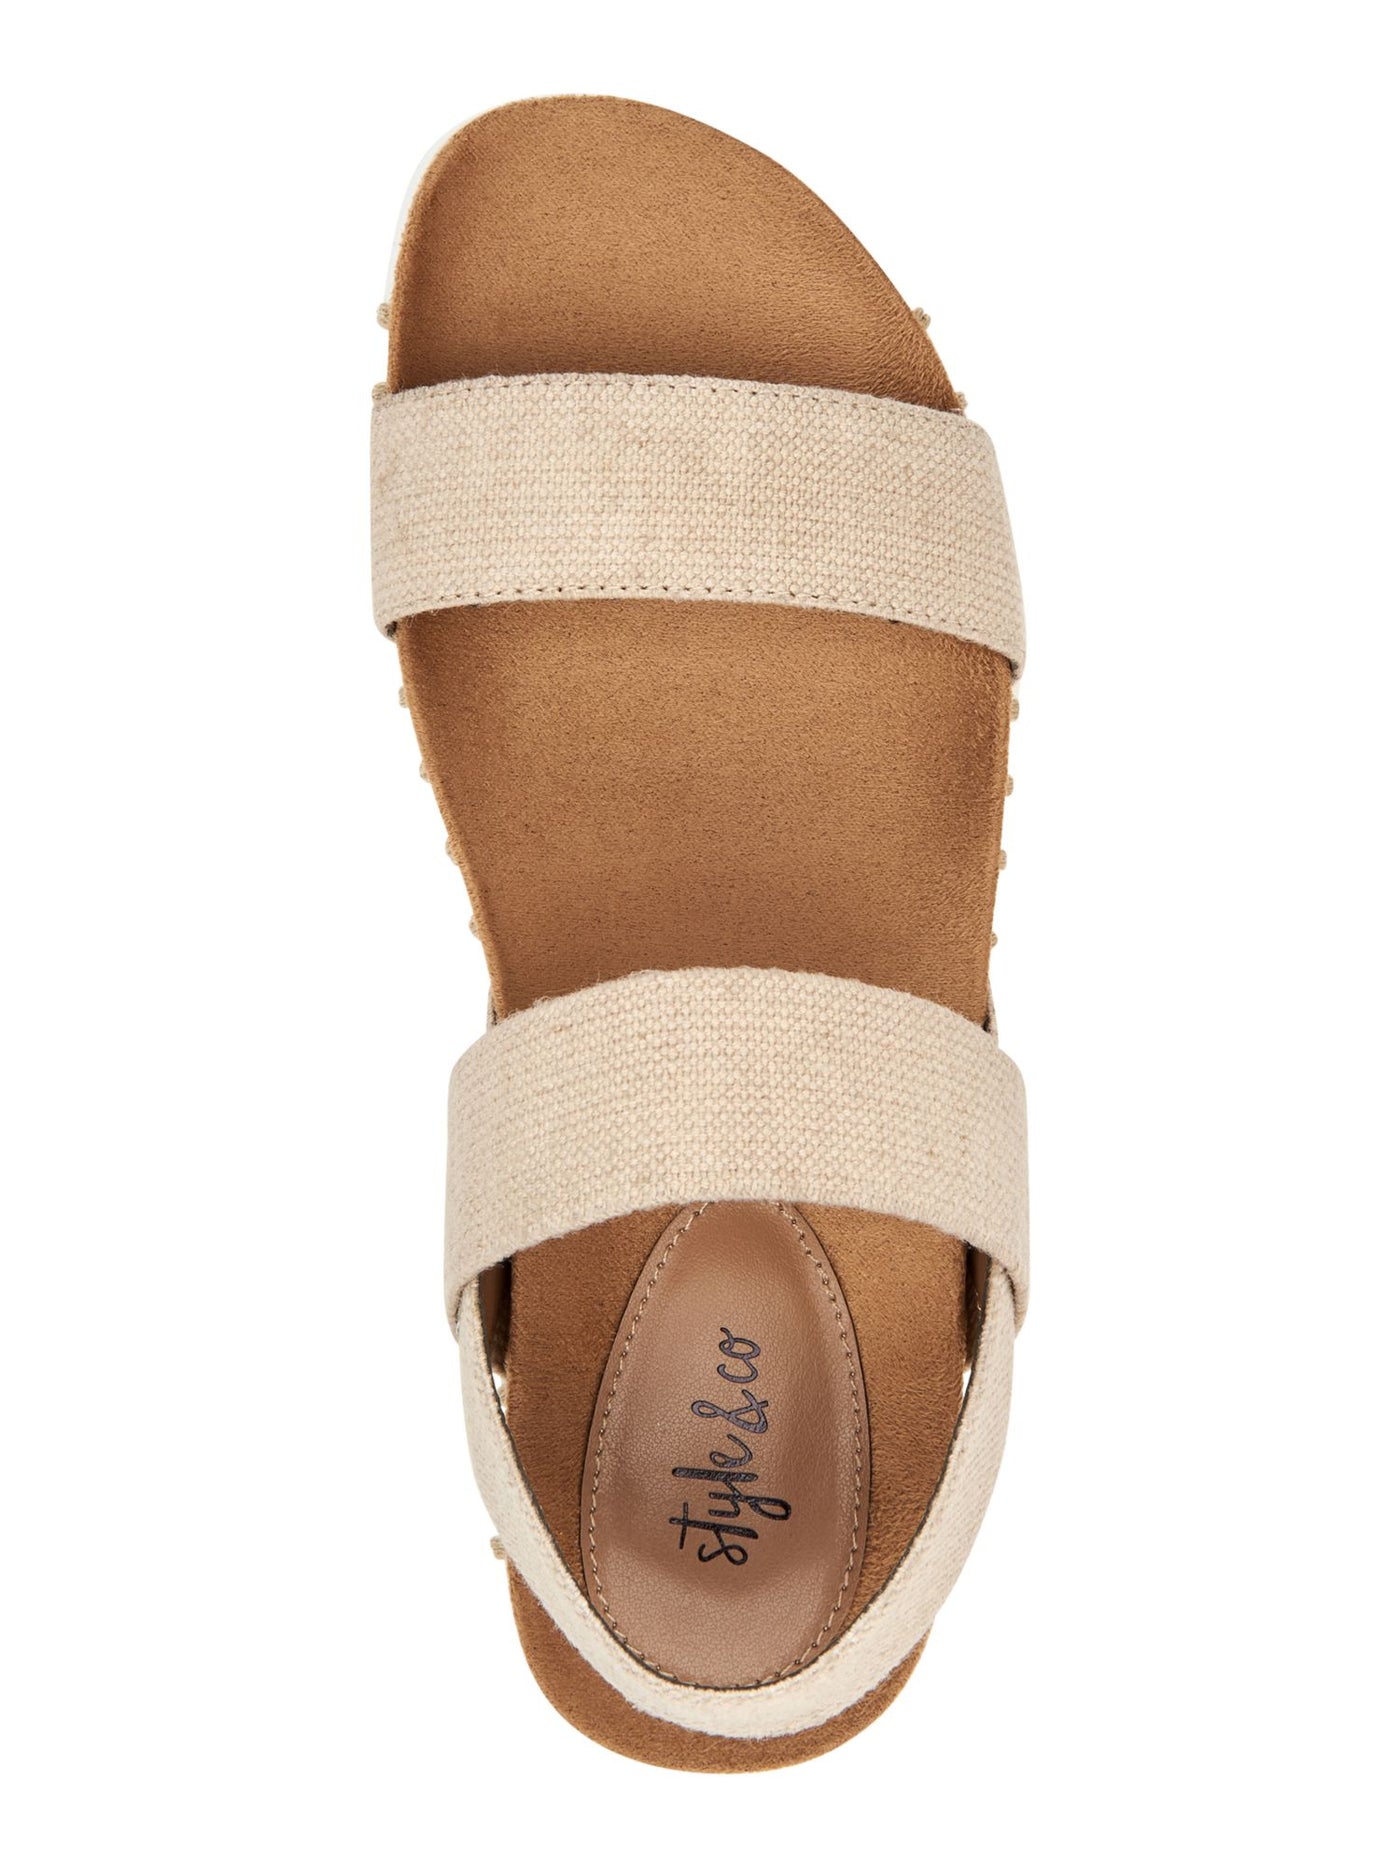 STYLE & COMPANY Womens Beige 1" Platform Stretch Comfort Milaa Round Toe Wedge Slip On Slingback Sandal 10 M